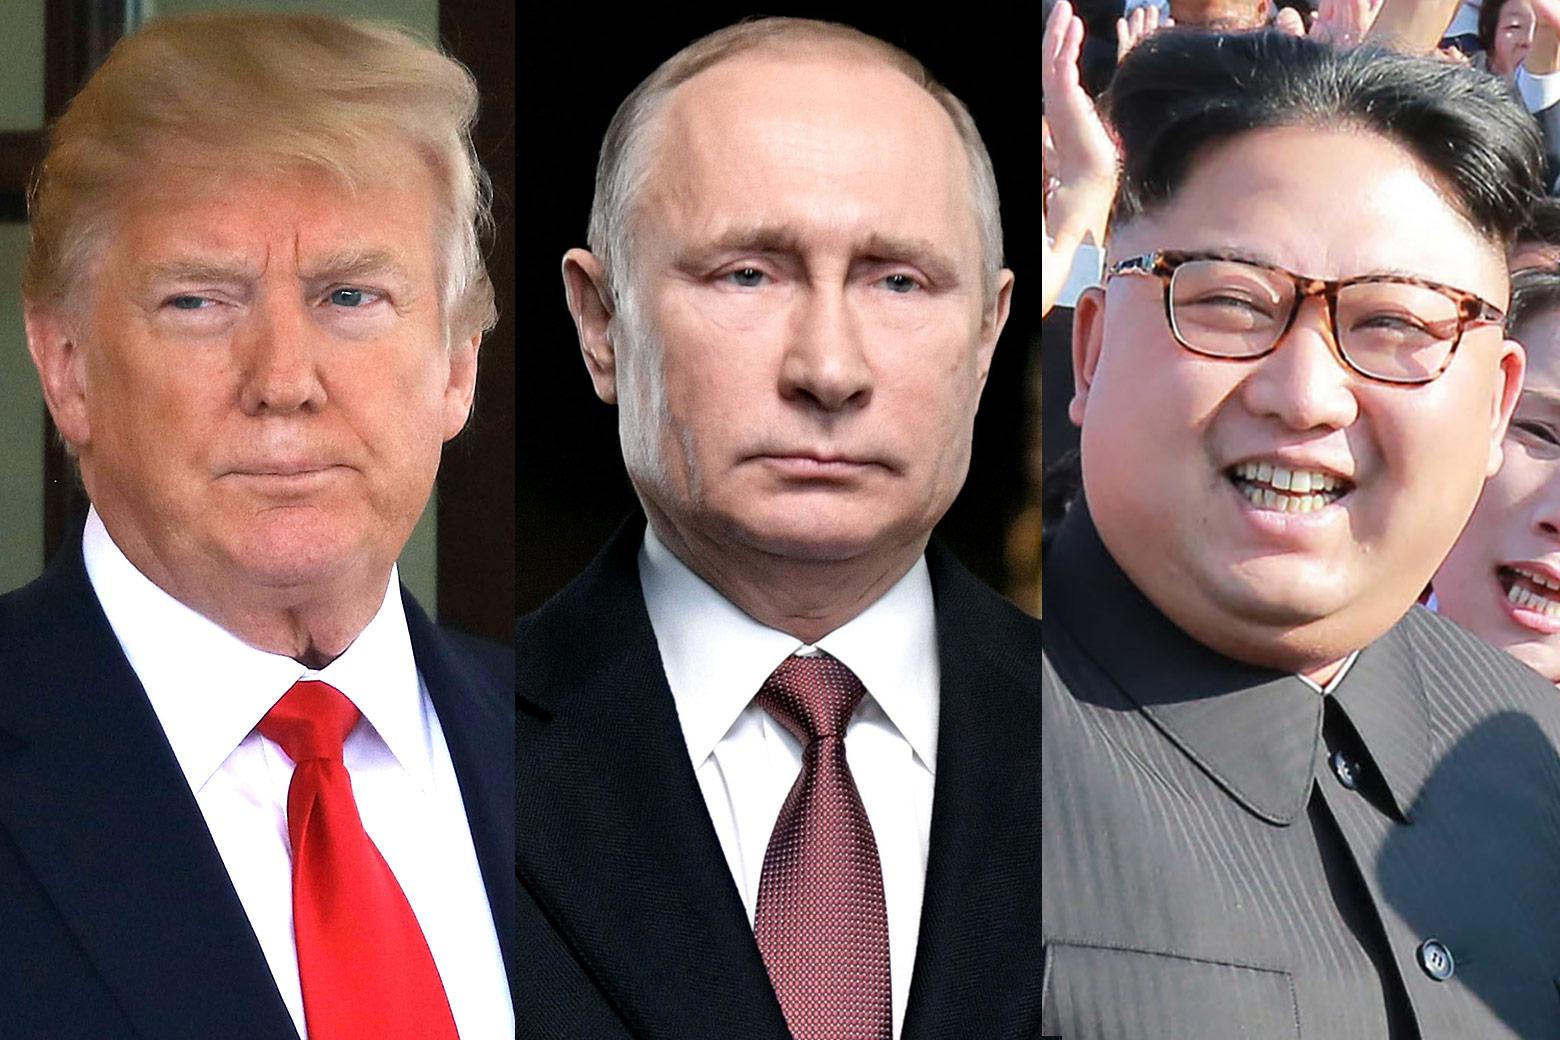 klassisk Bemærk venligst rør Putin: Kim Jong-un “won this round” over Trump.